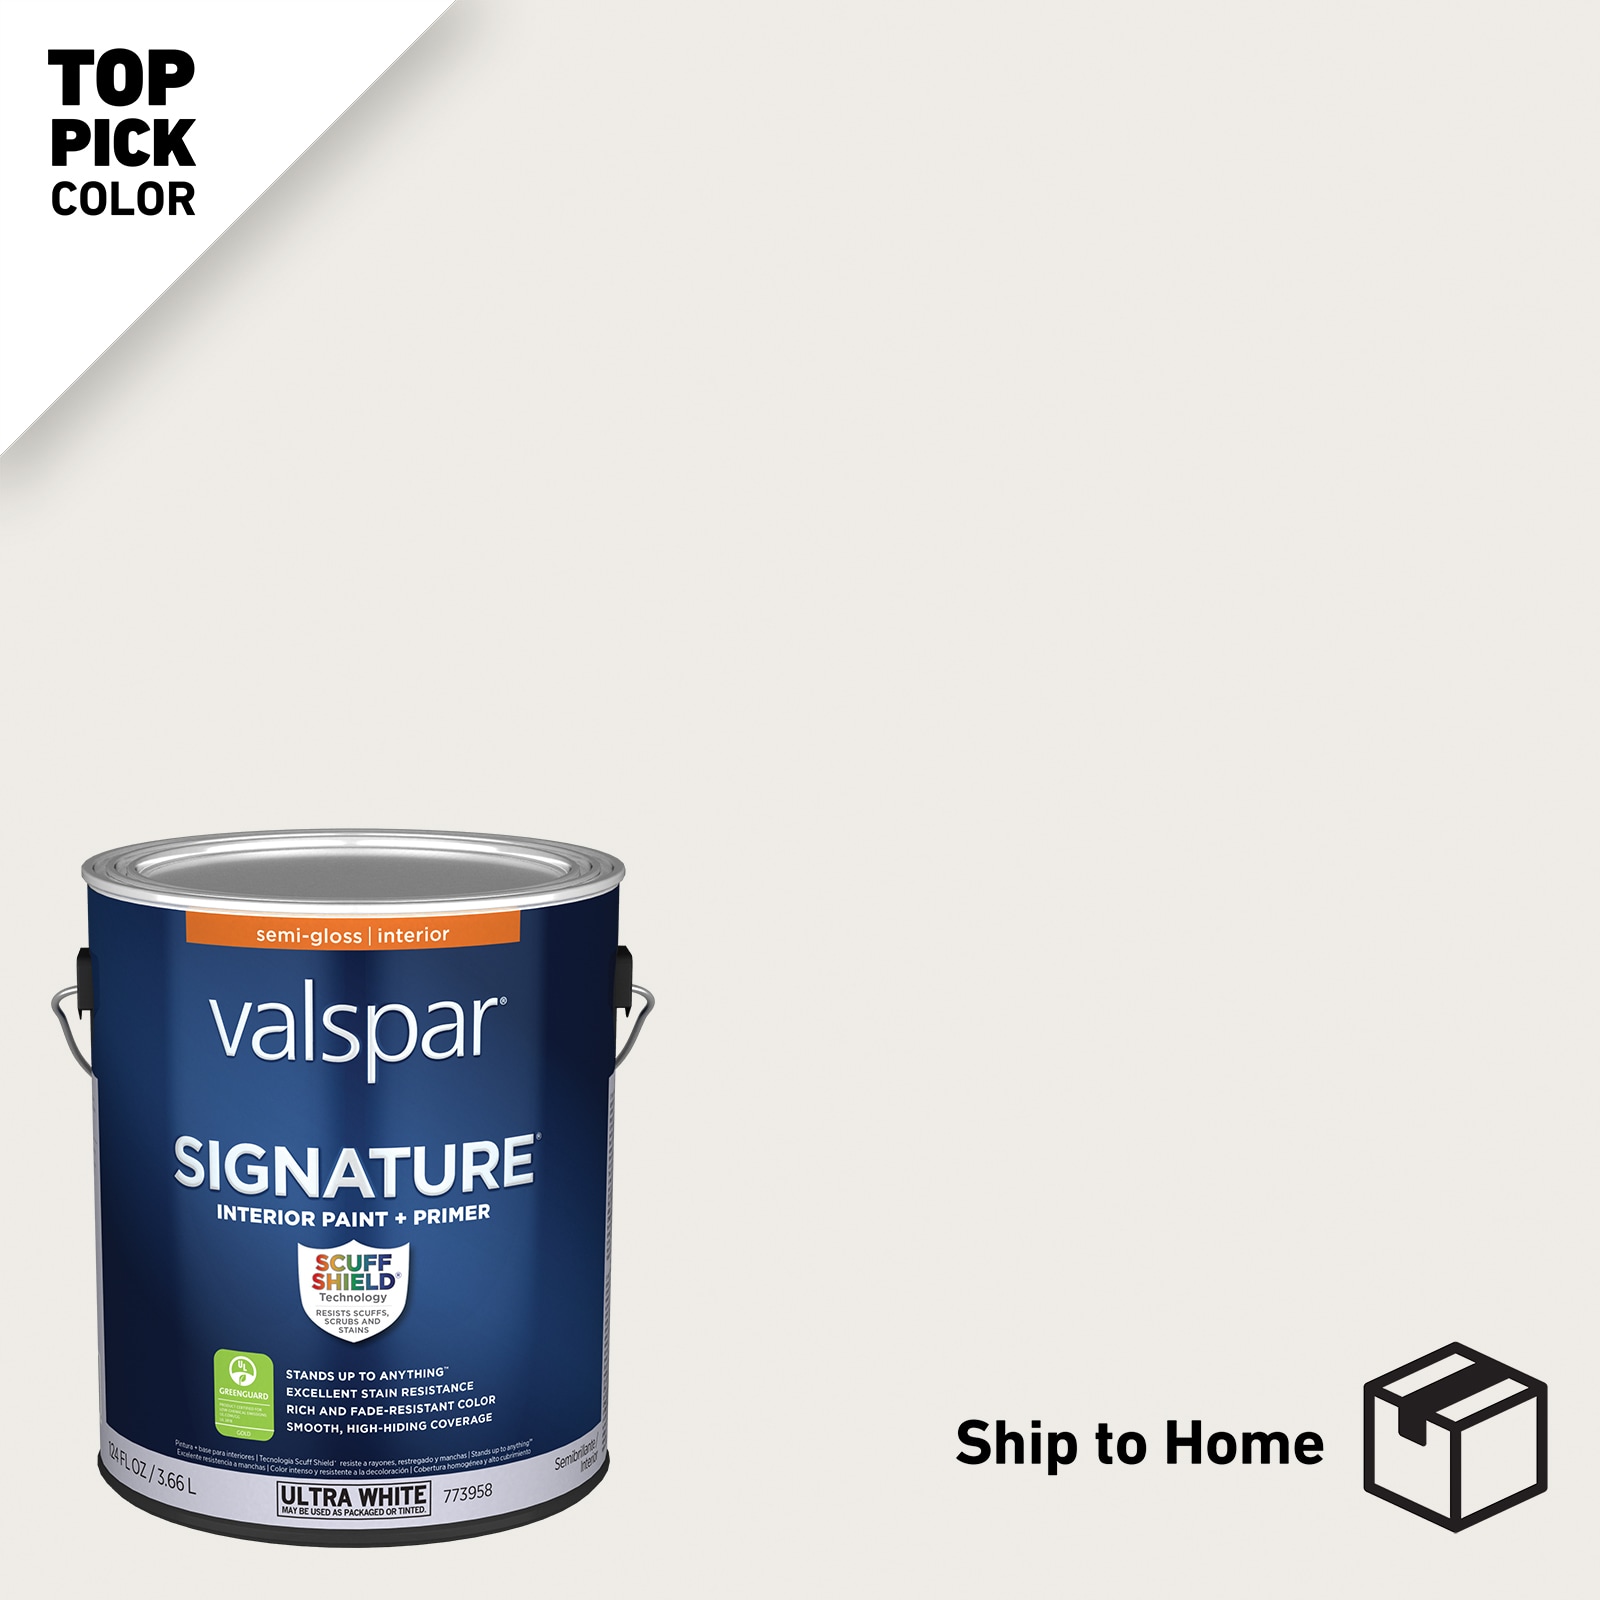 Valspar Signature Semi-gloss Pure White Hgsw4006 Latex Interior Paint +  Primer (1-Gallon) at